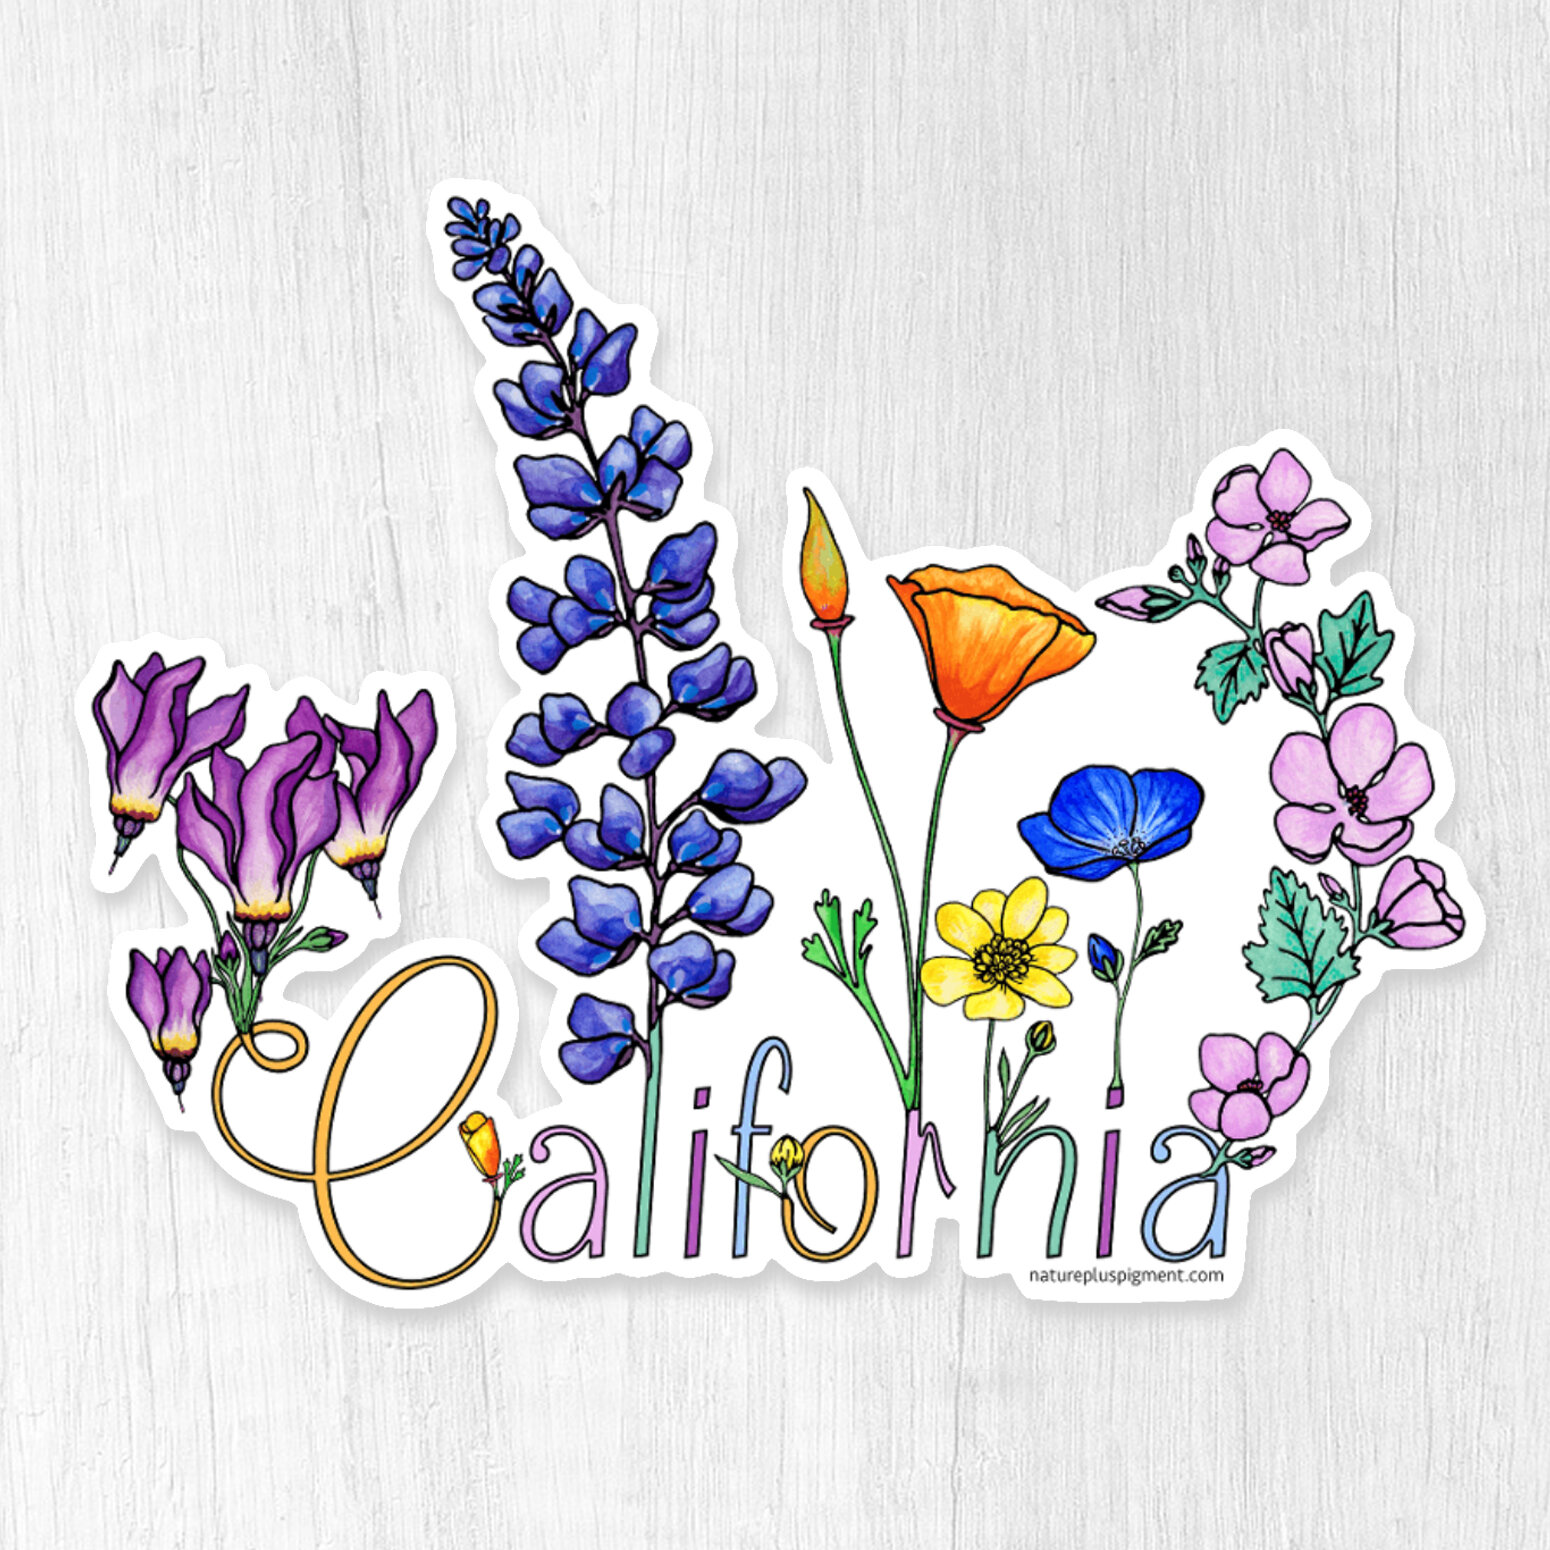 CaliforniaWild_CMB.jpg